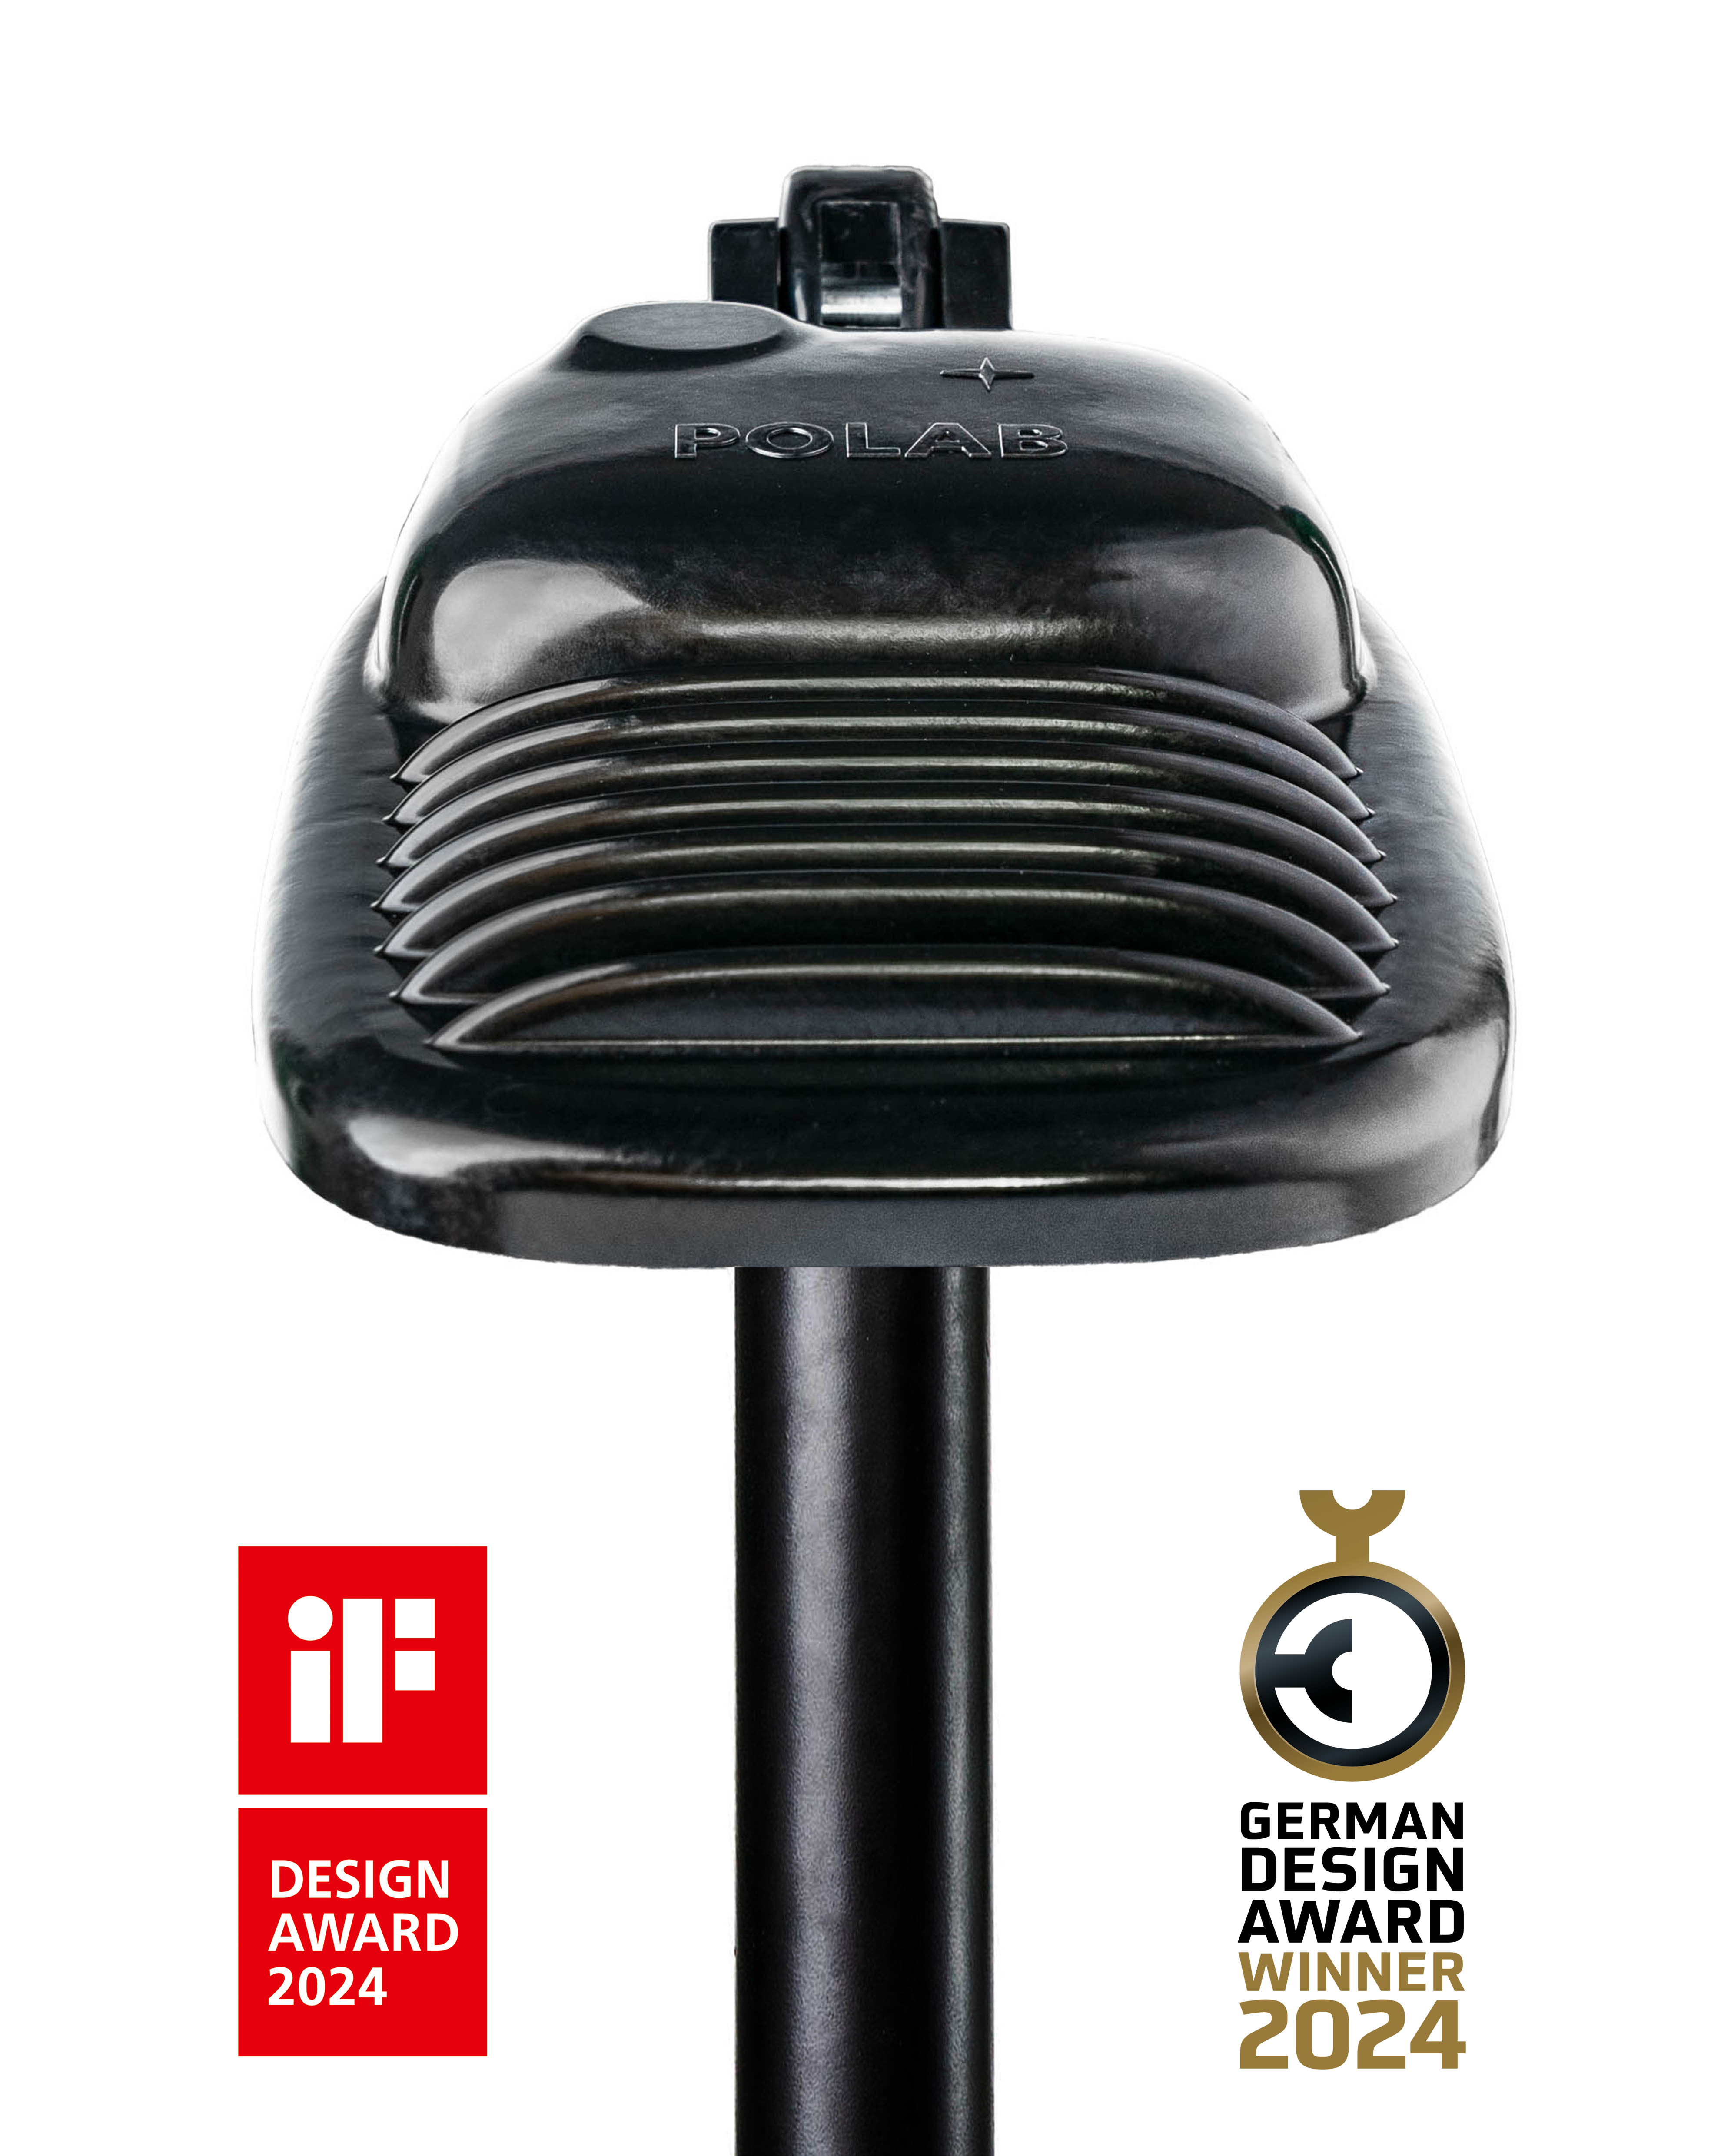 German Design Award winner 2024